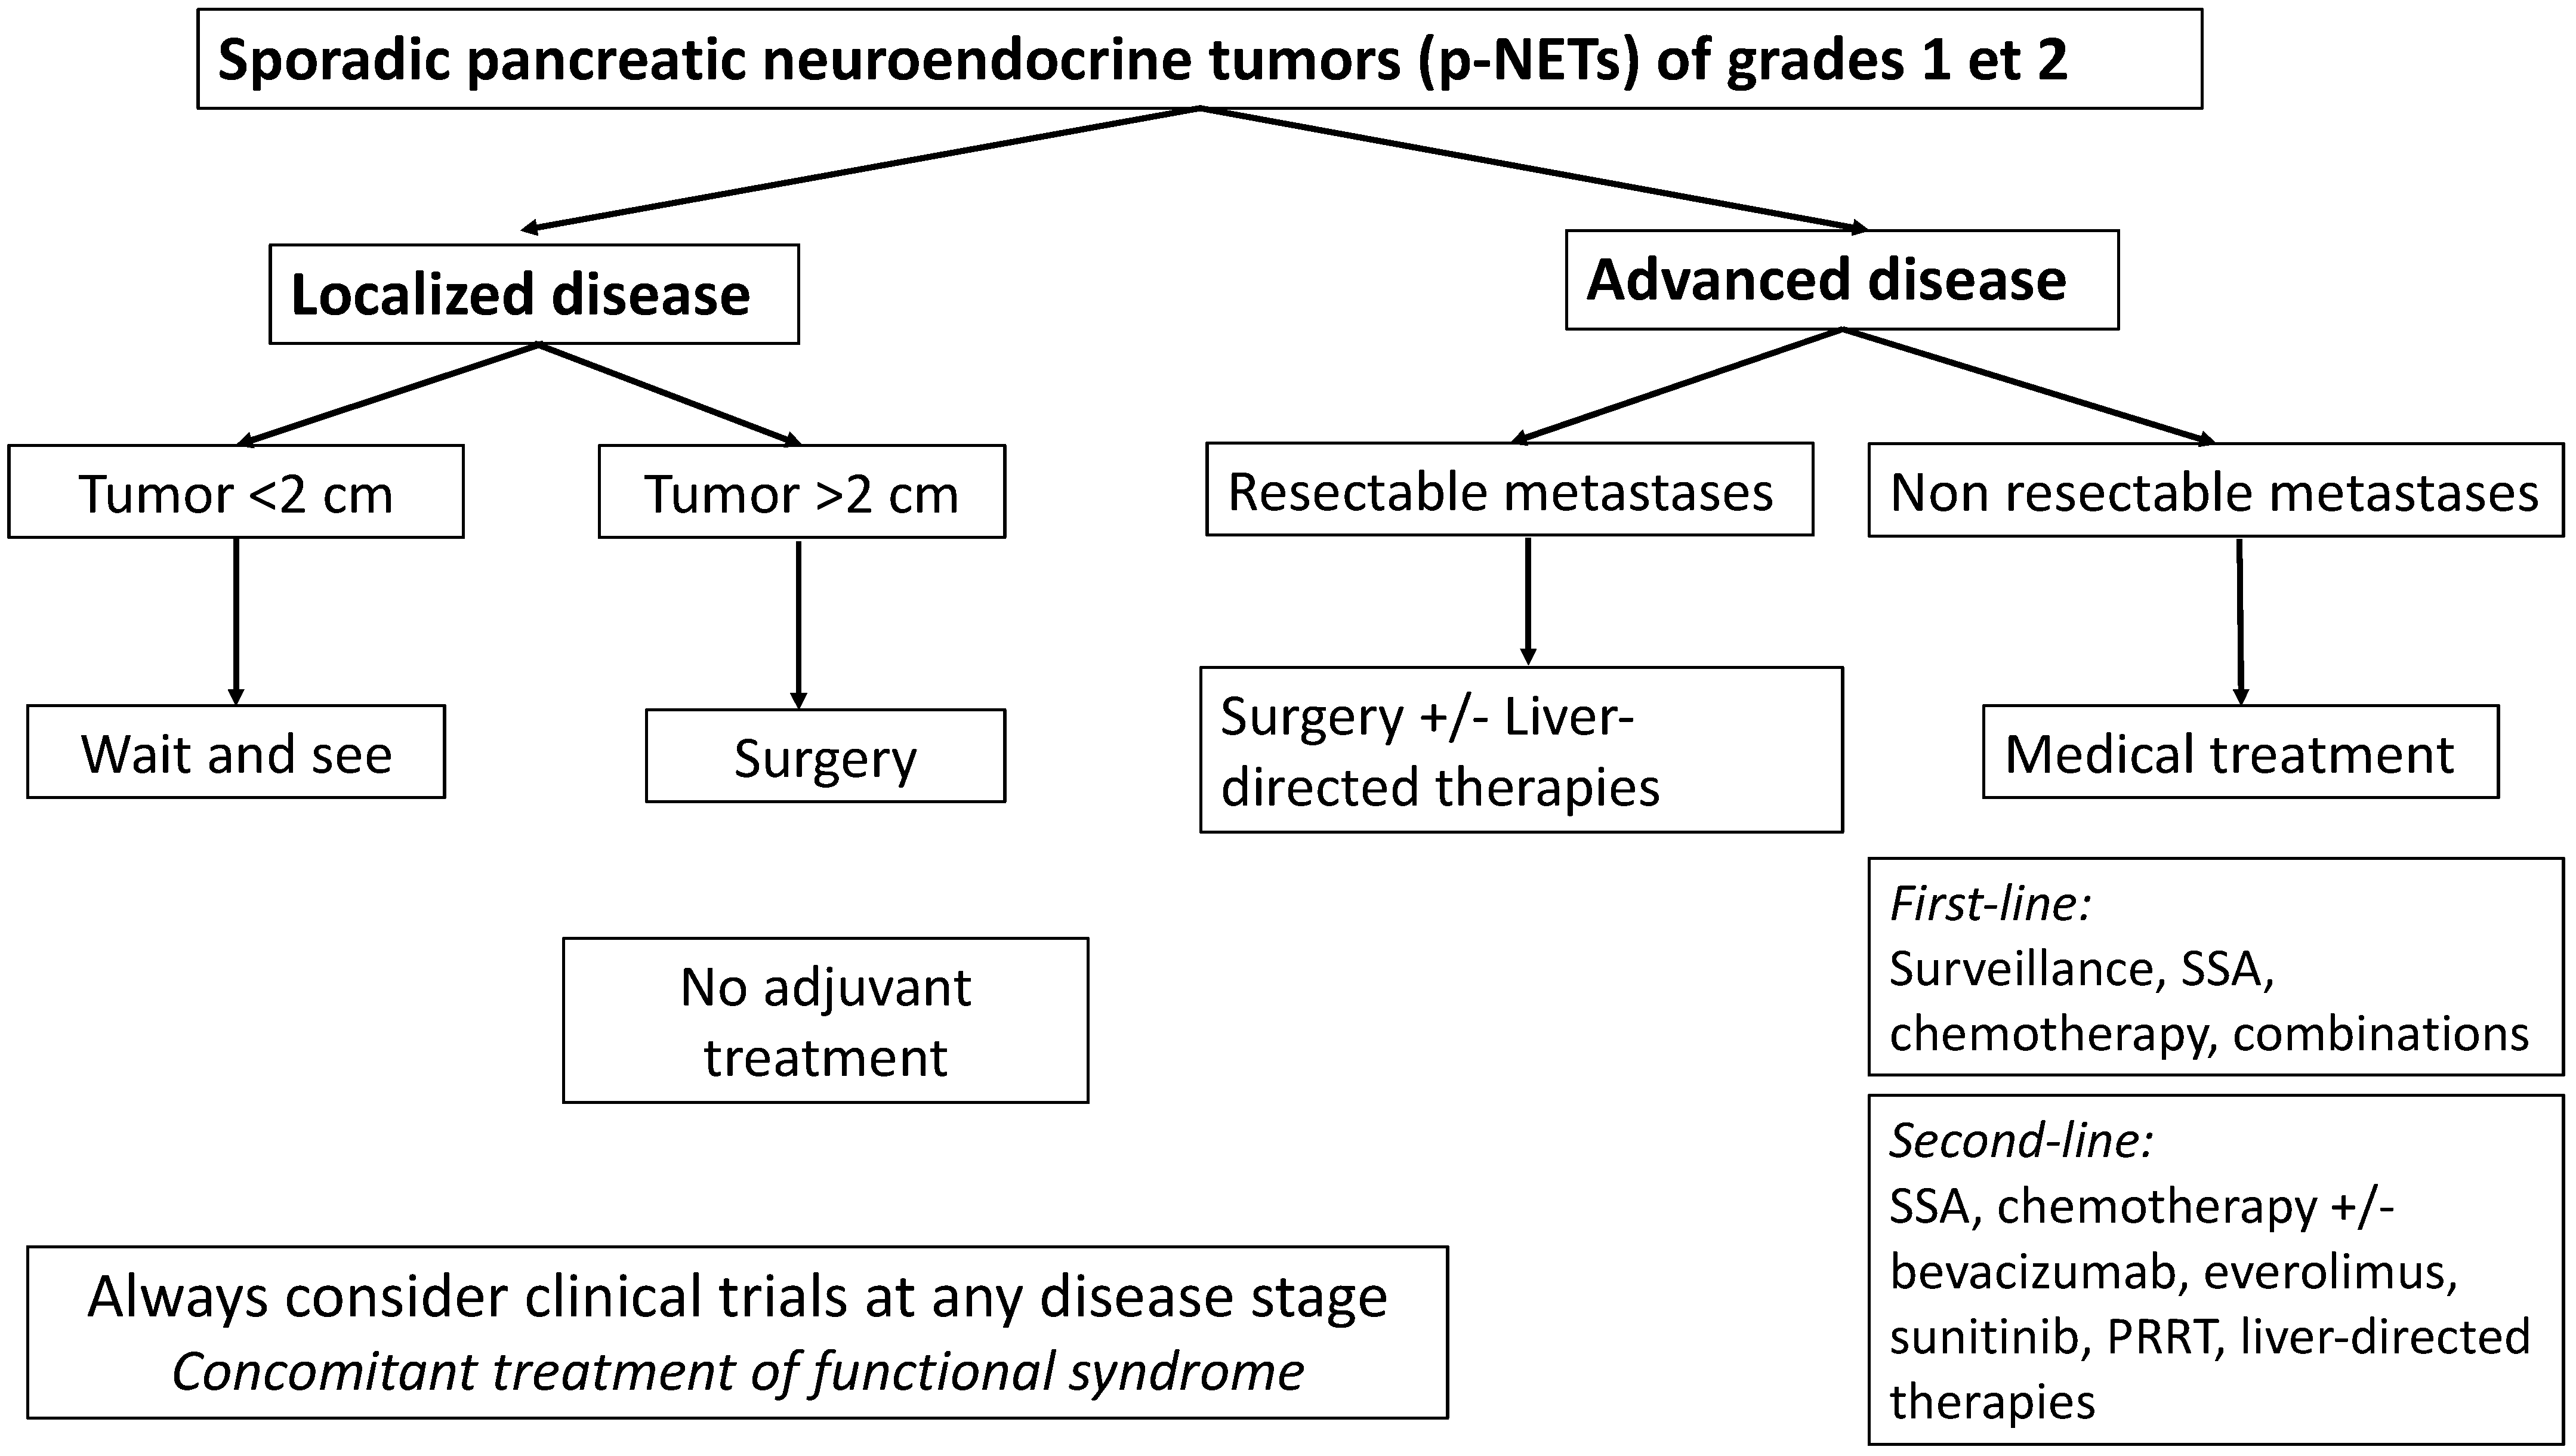 Pancreatic neuroendocrine tumor